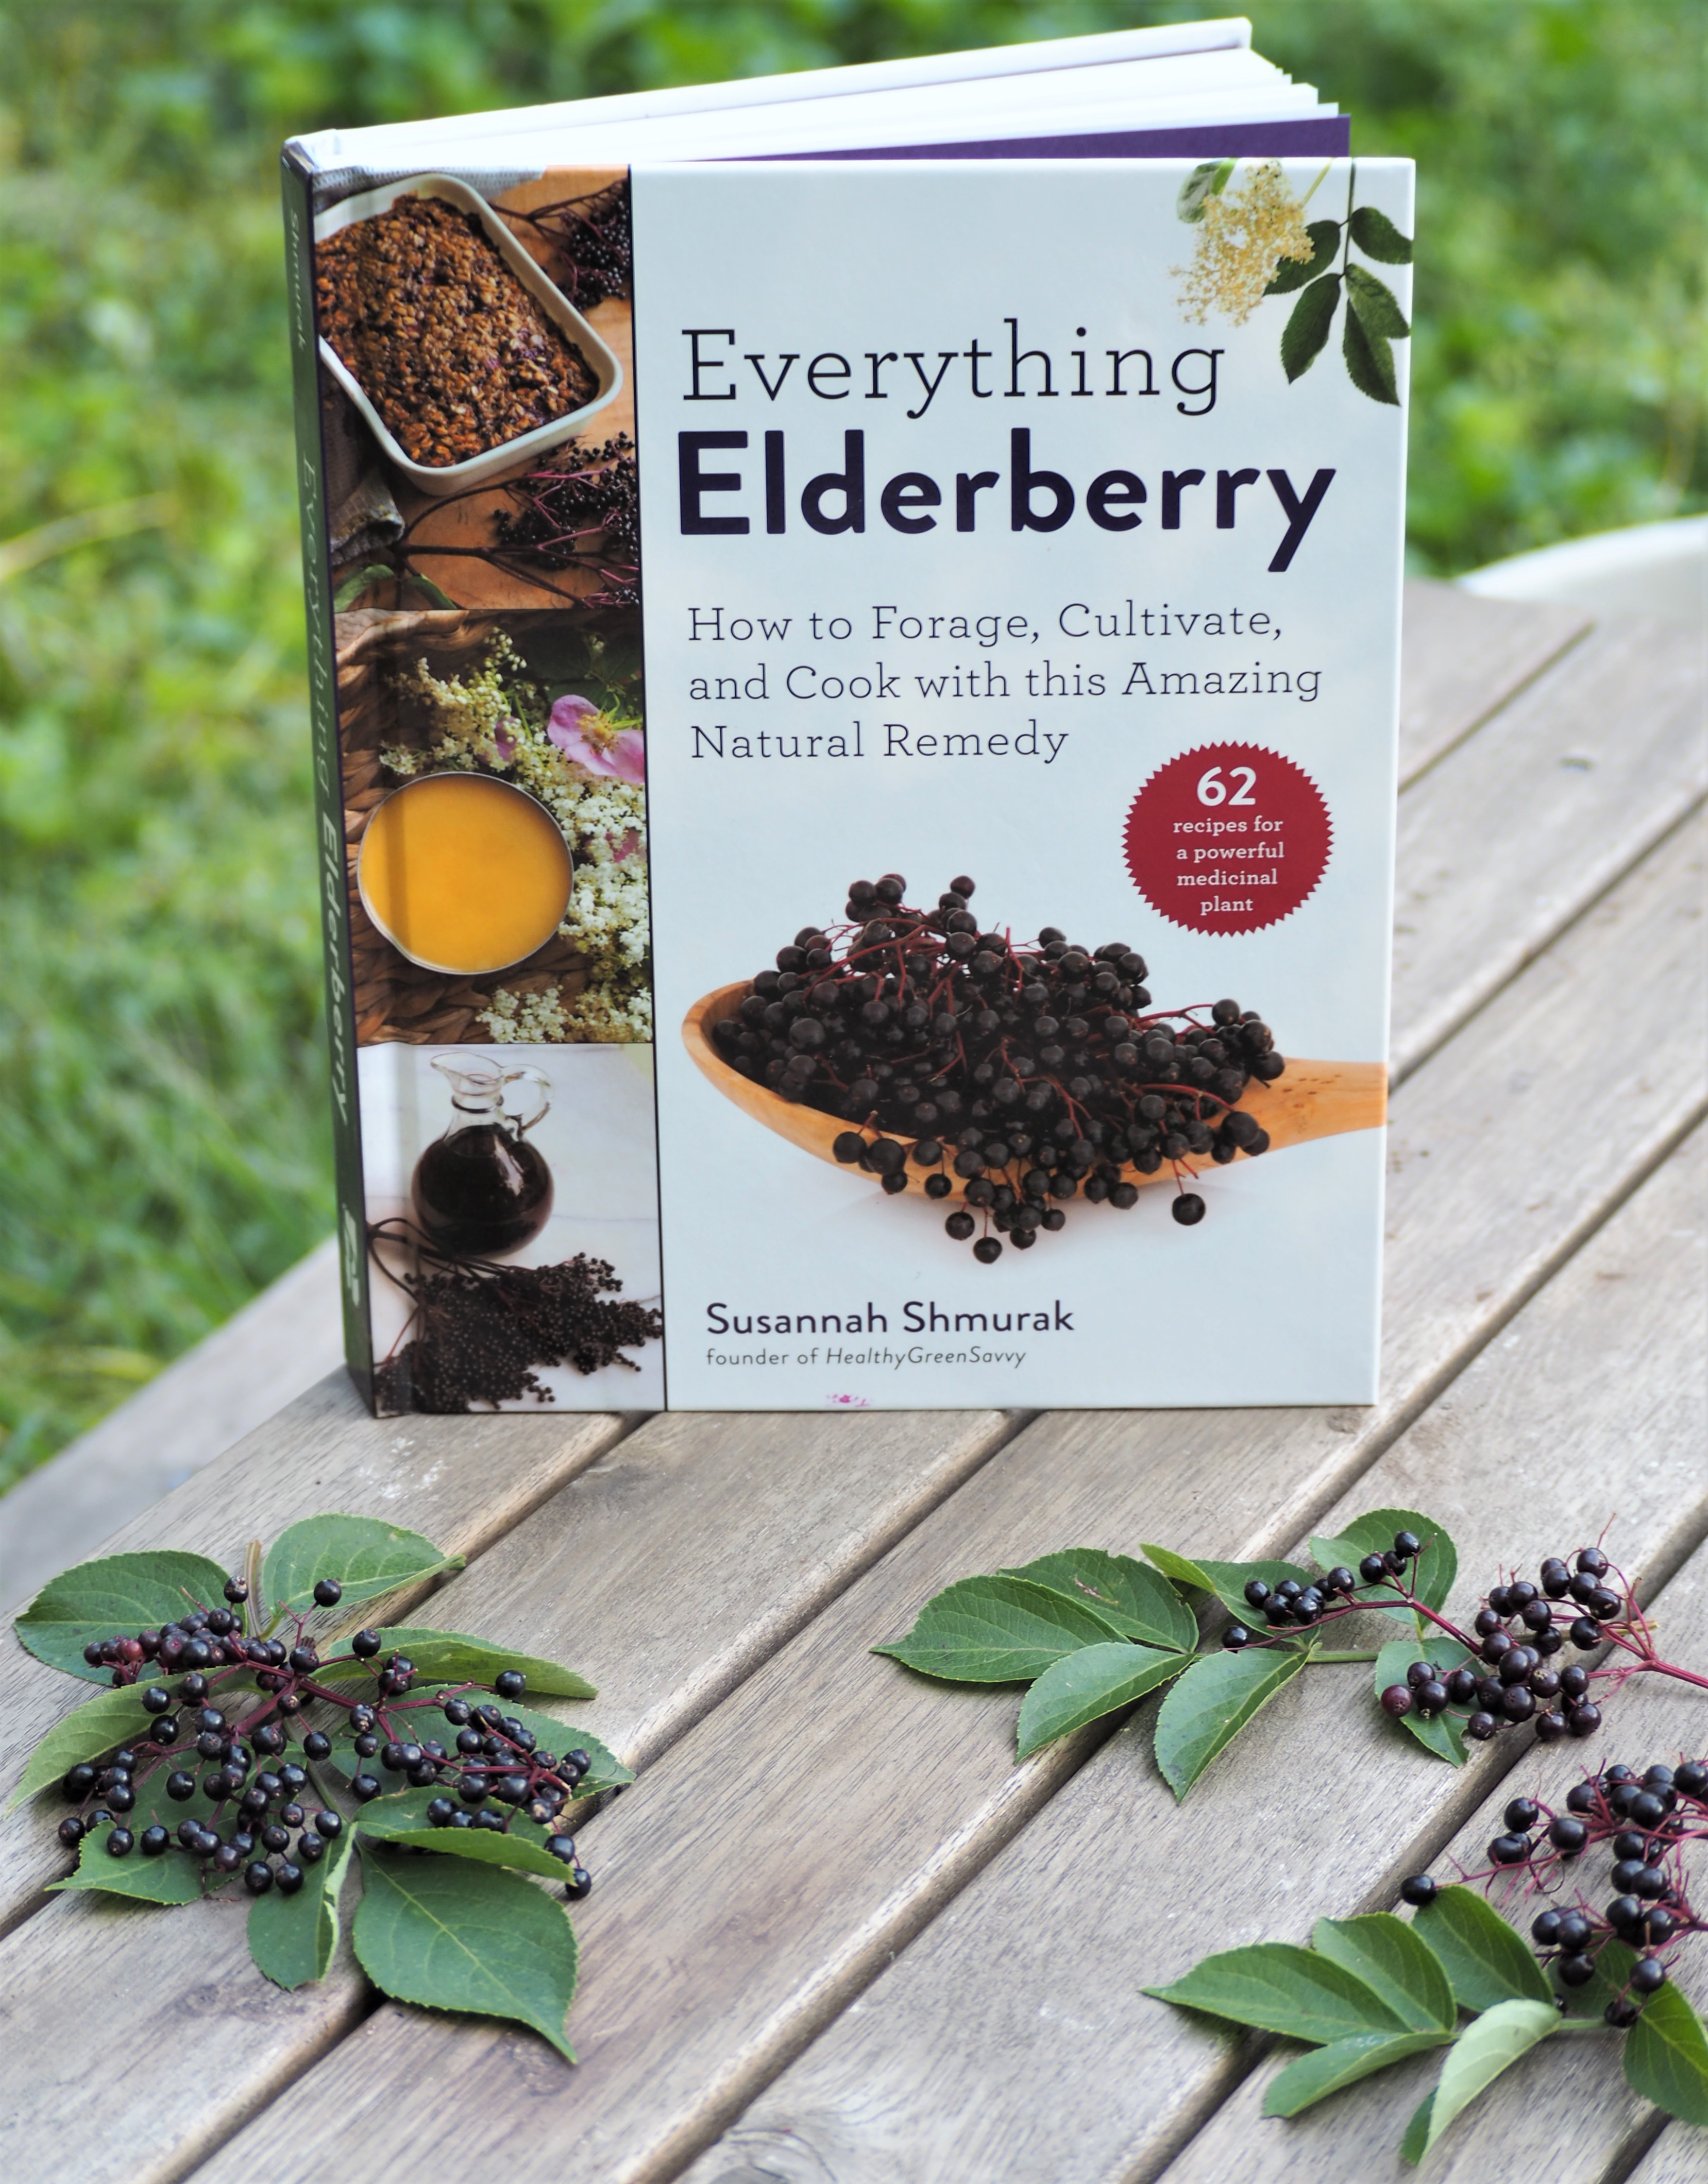 Book with elderberries on table